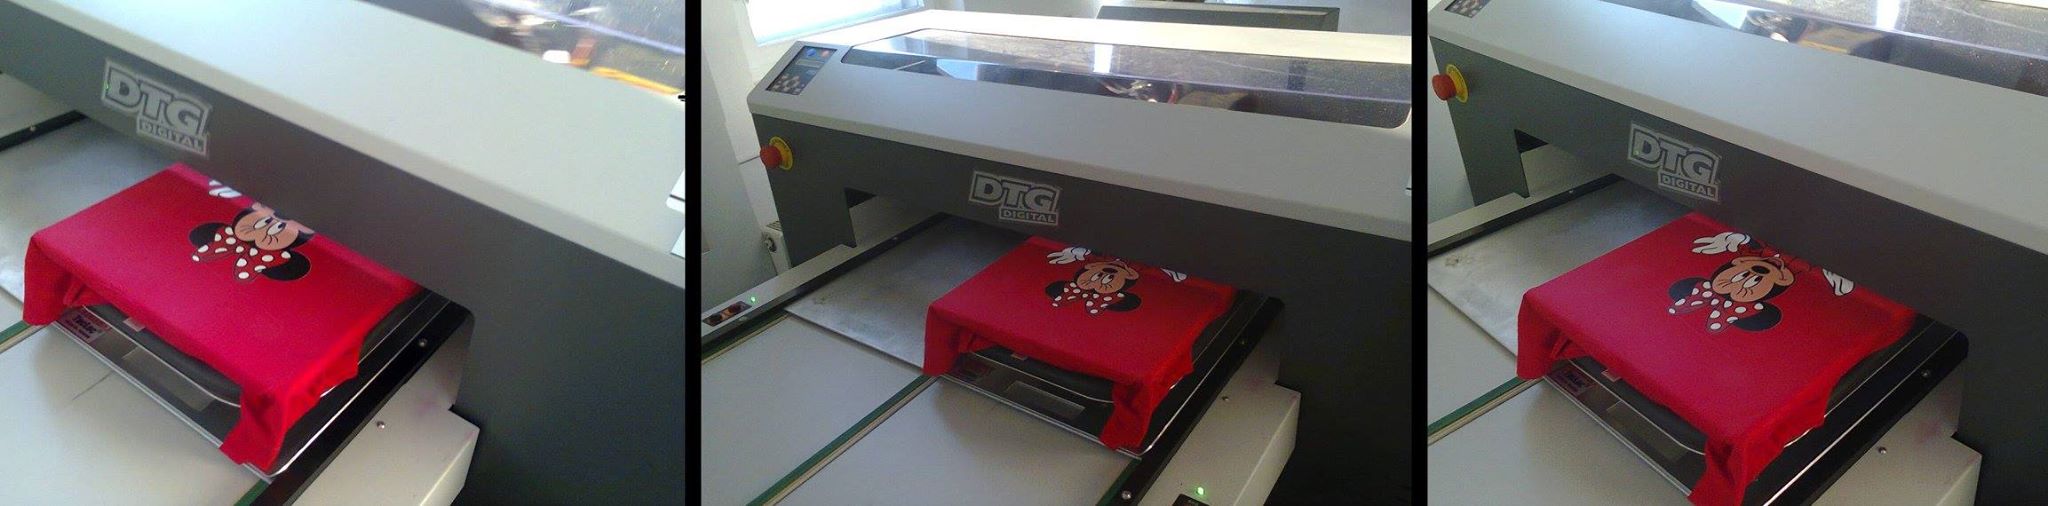 DTG Direct Printing Machine